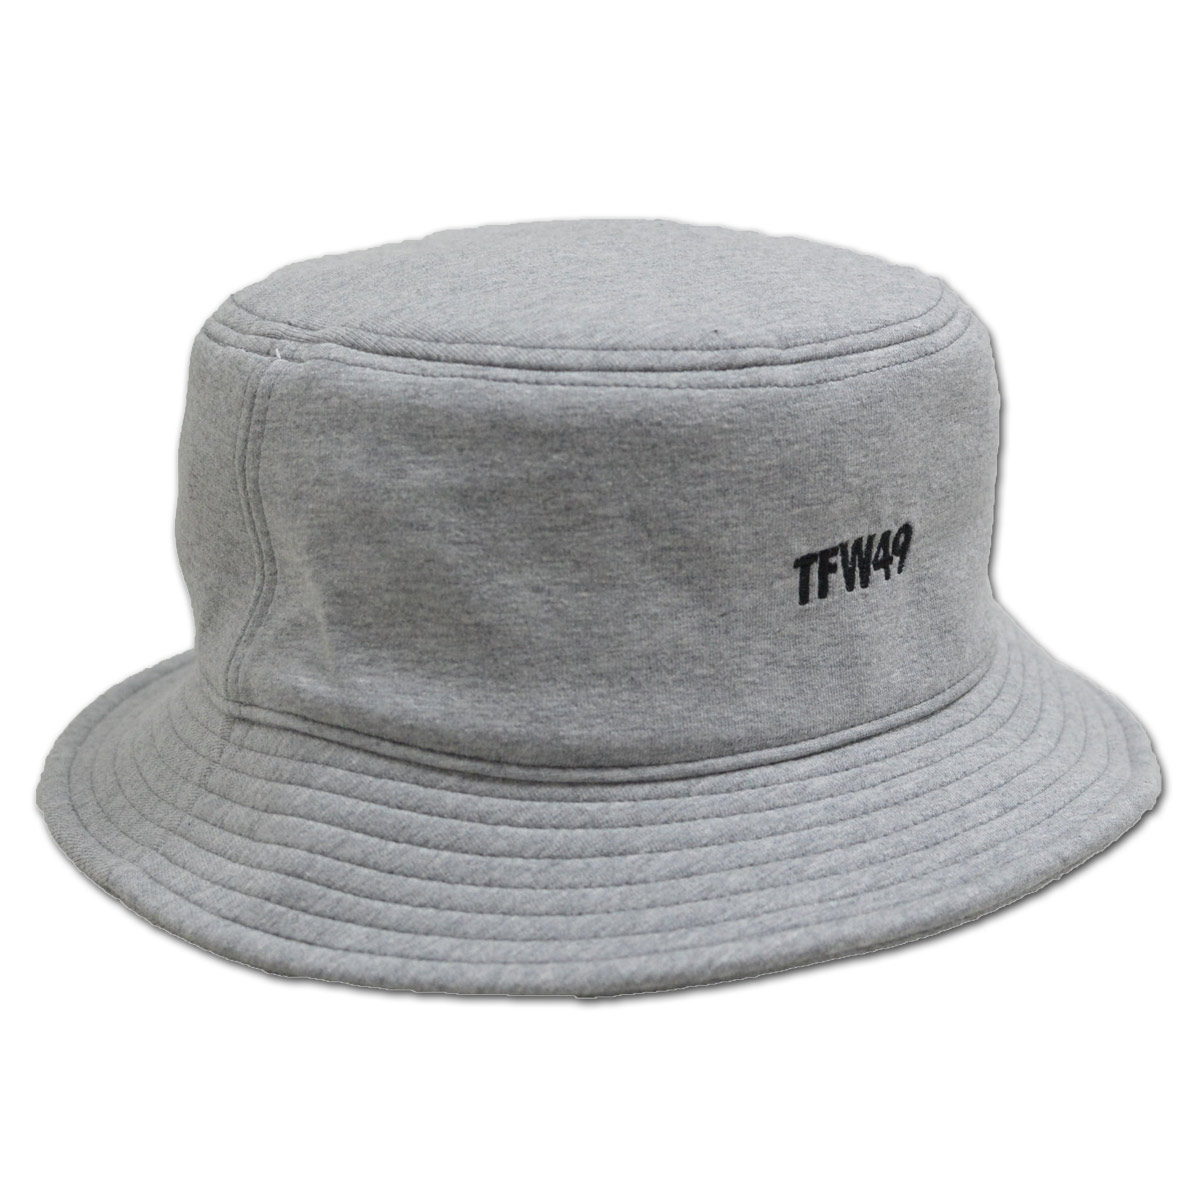 TFW49 ハット帽子 バケットハット メンズ junhashimoto ジュンハシモト